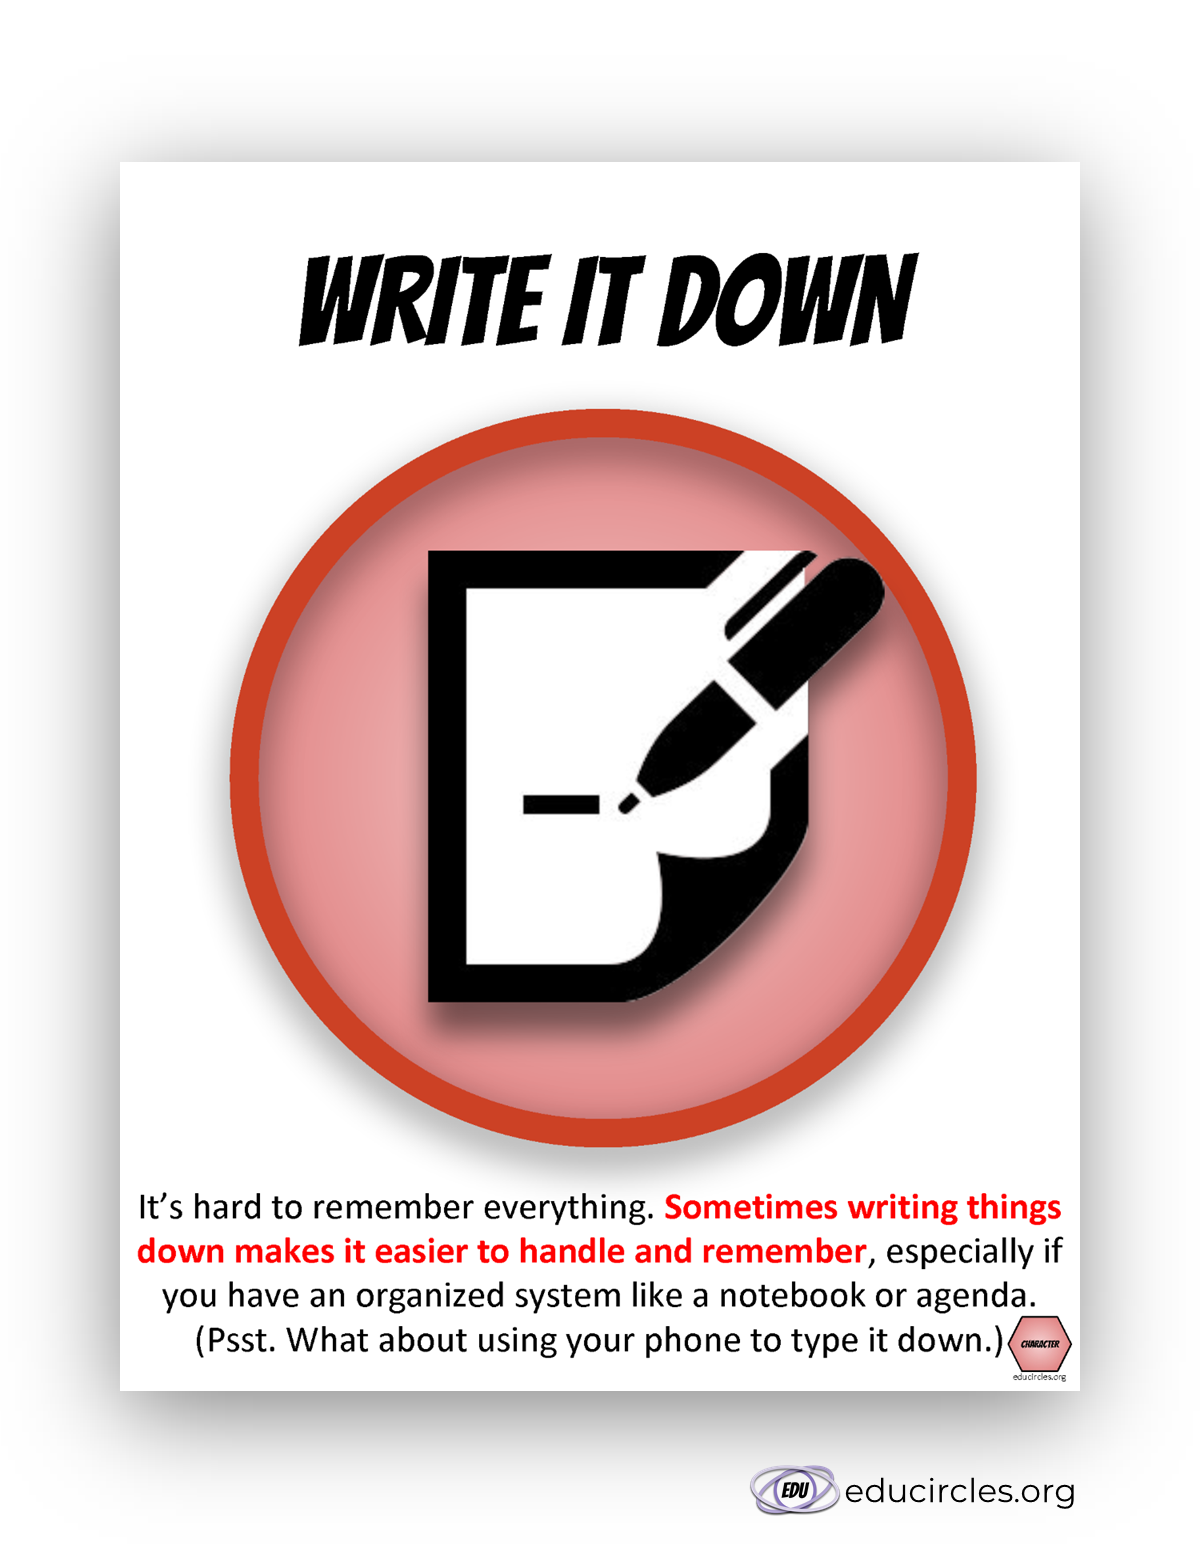 FREE Growth Mindset Poster PDF slide 9 - strategy: write it down